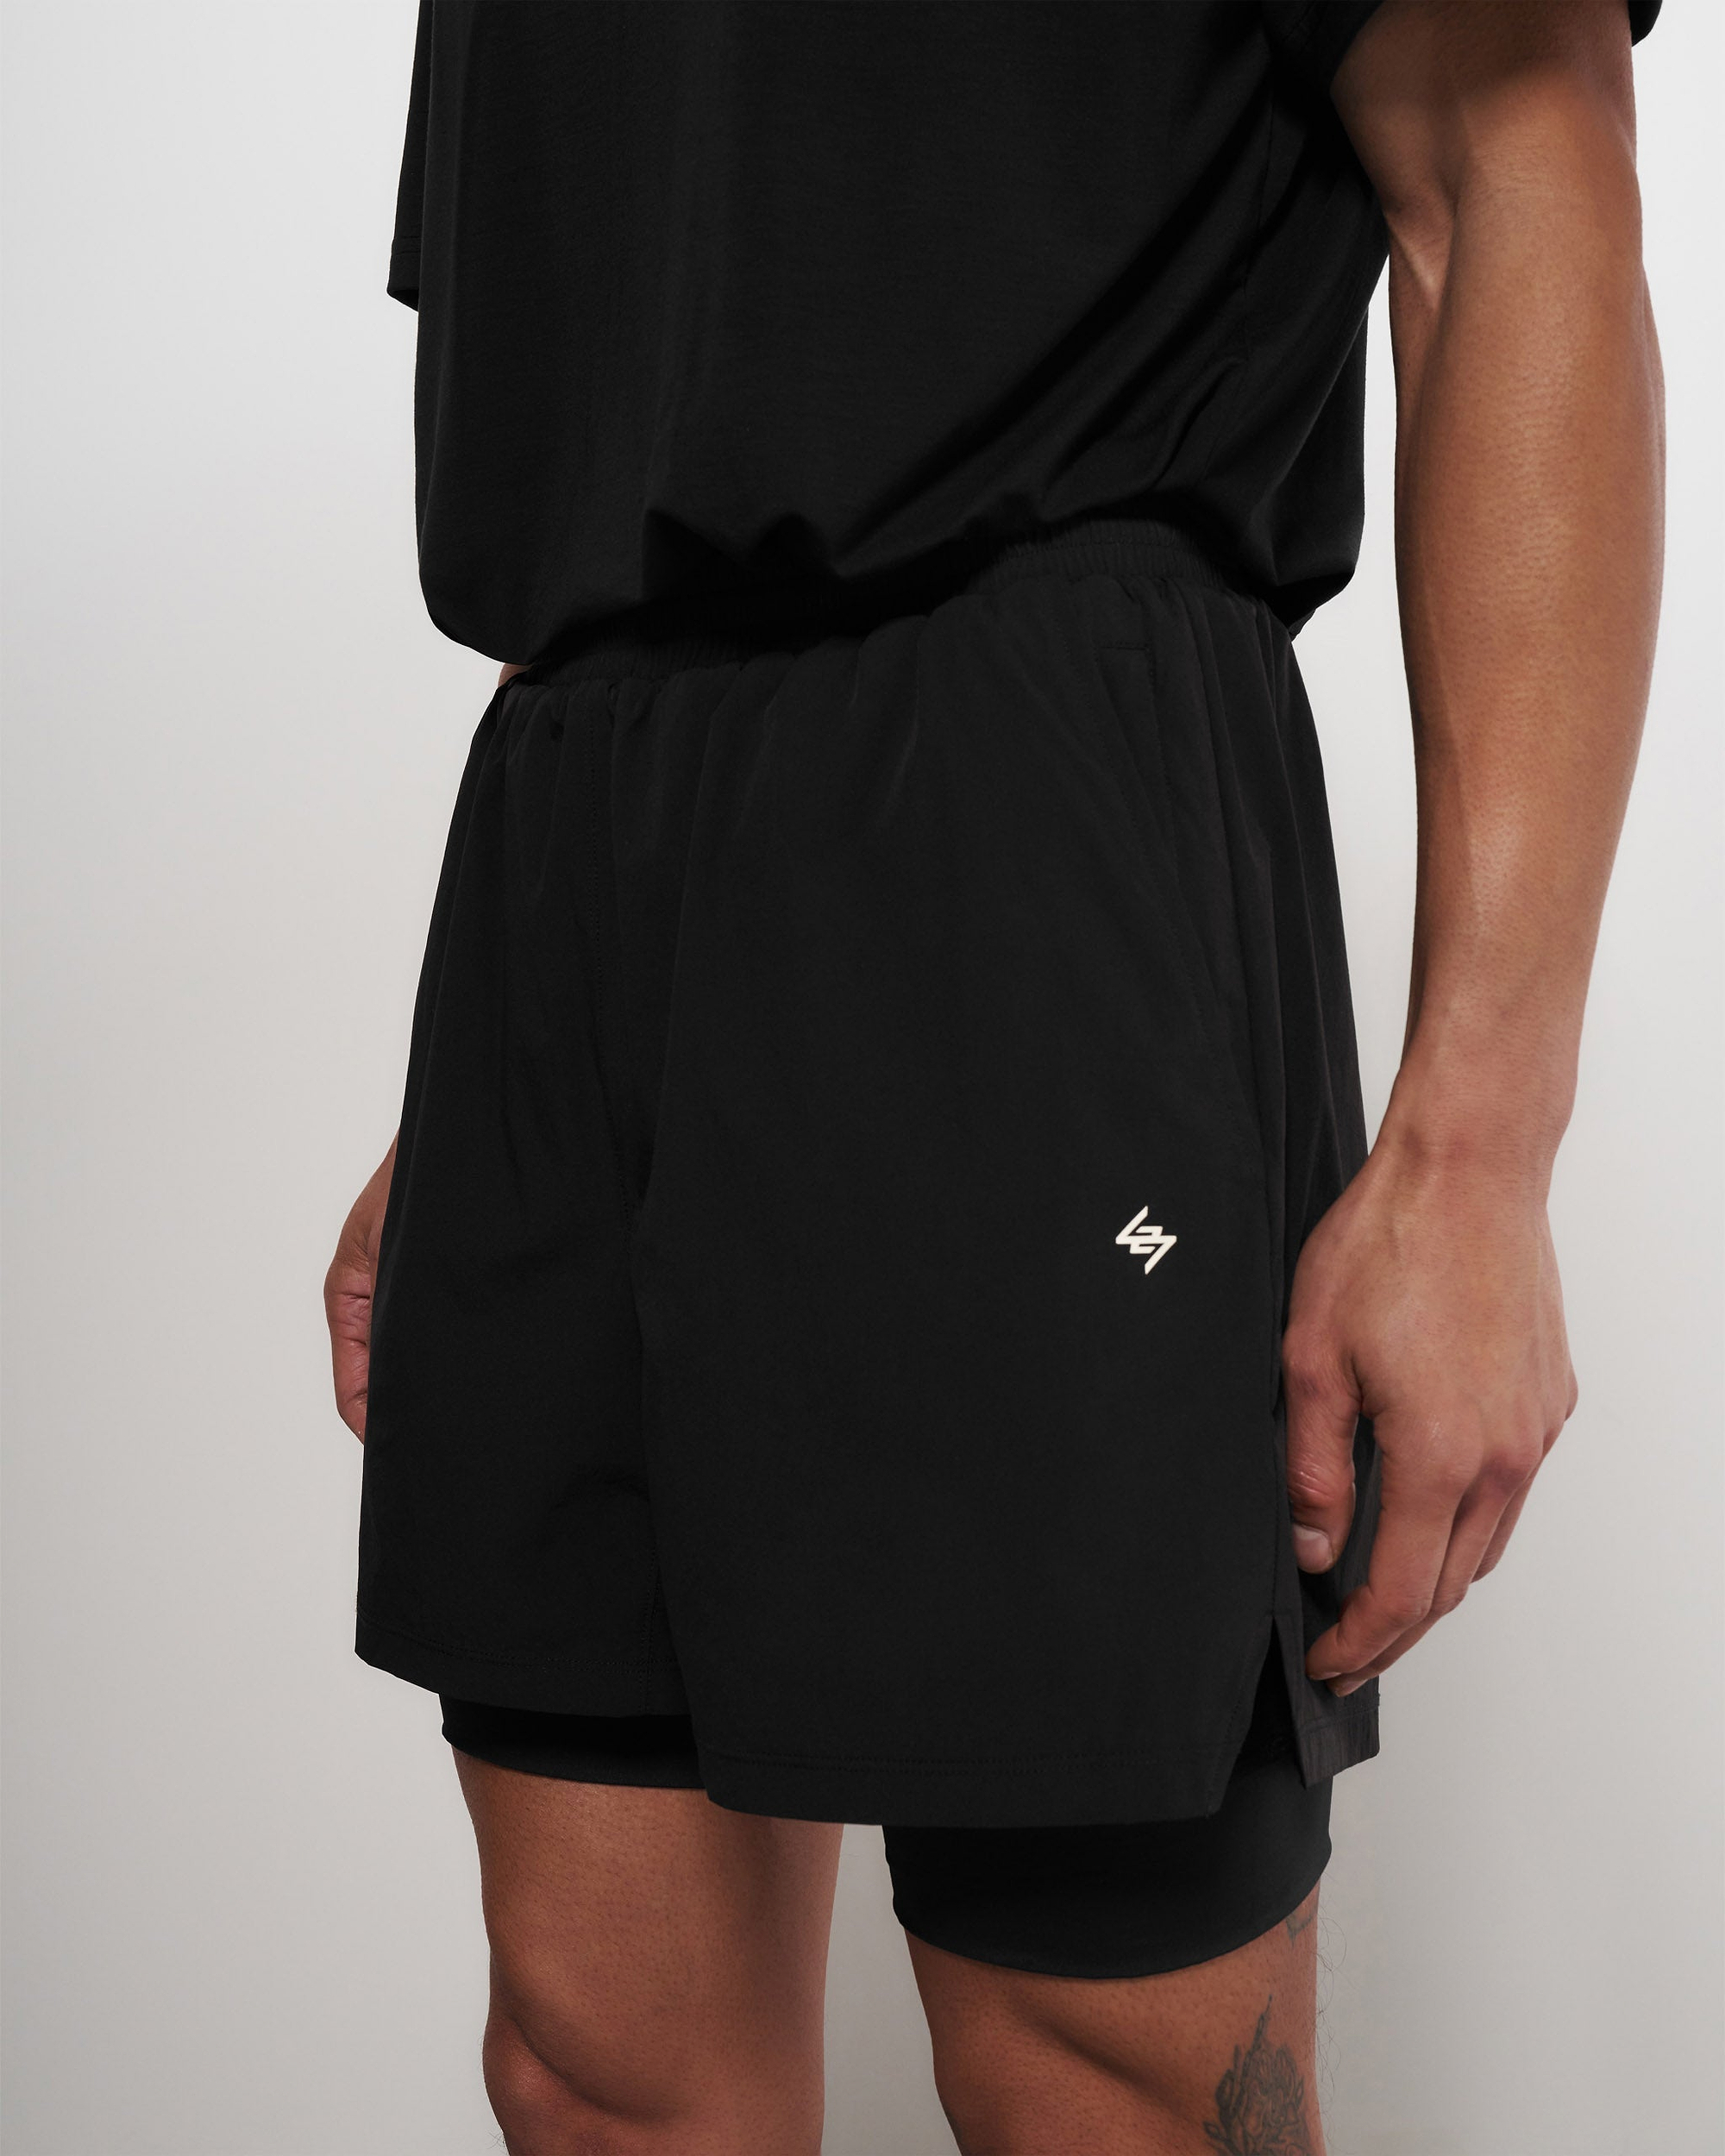 247 2-In-1 Shorts | Black  Shorts 247 | Represent Clo